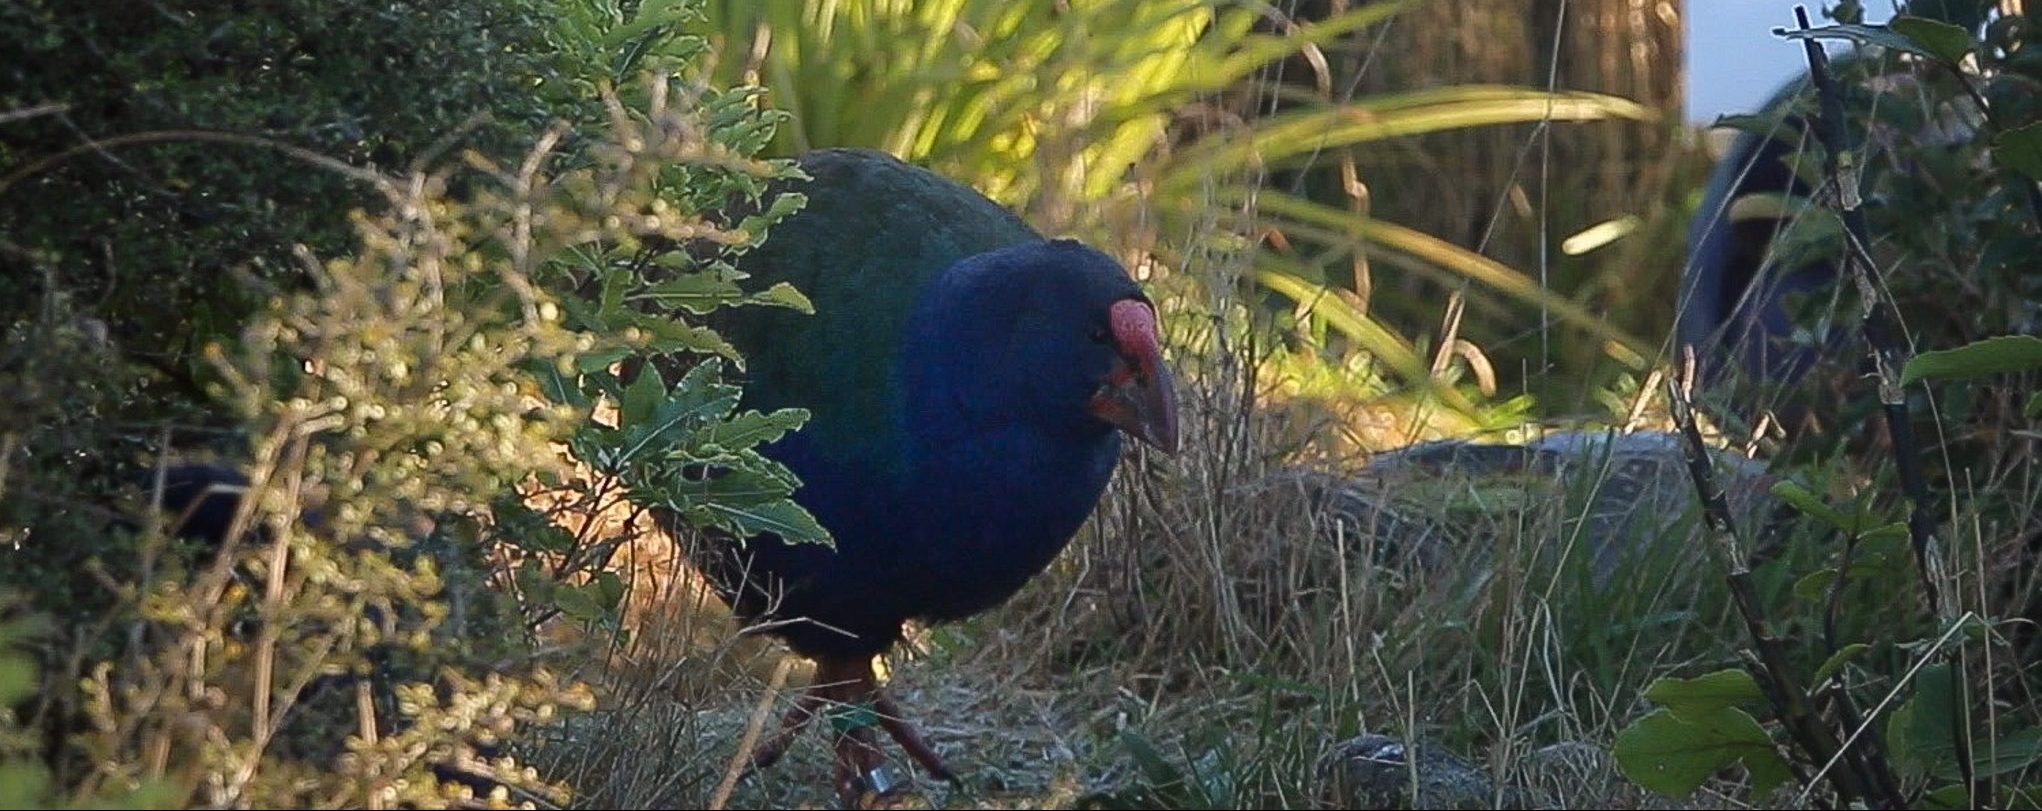 VIDEO: Wildlife in Dunedin